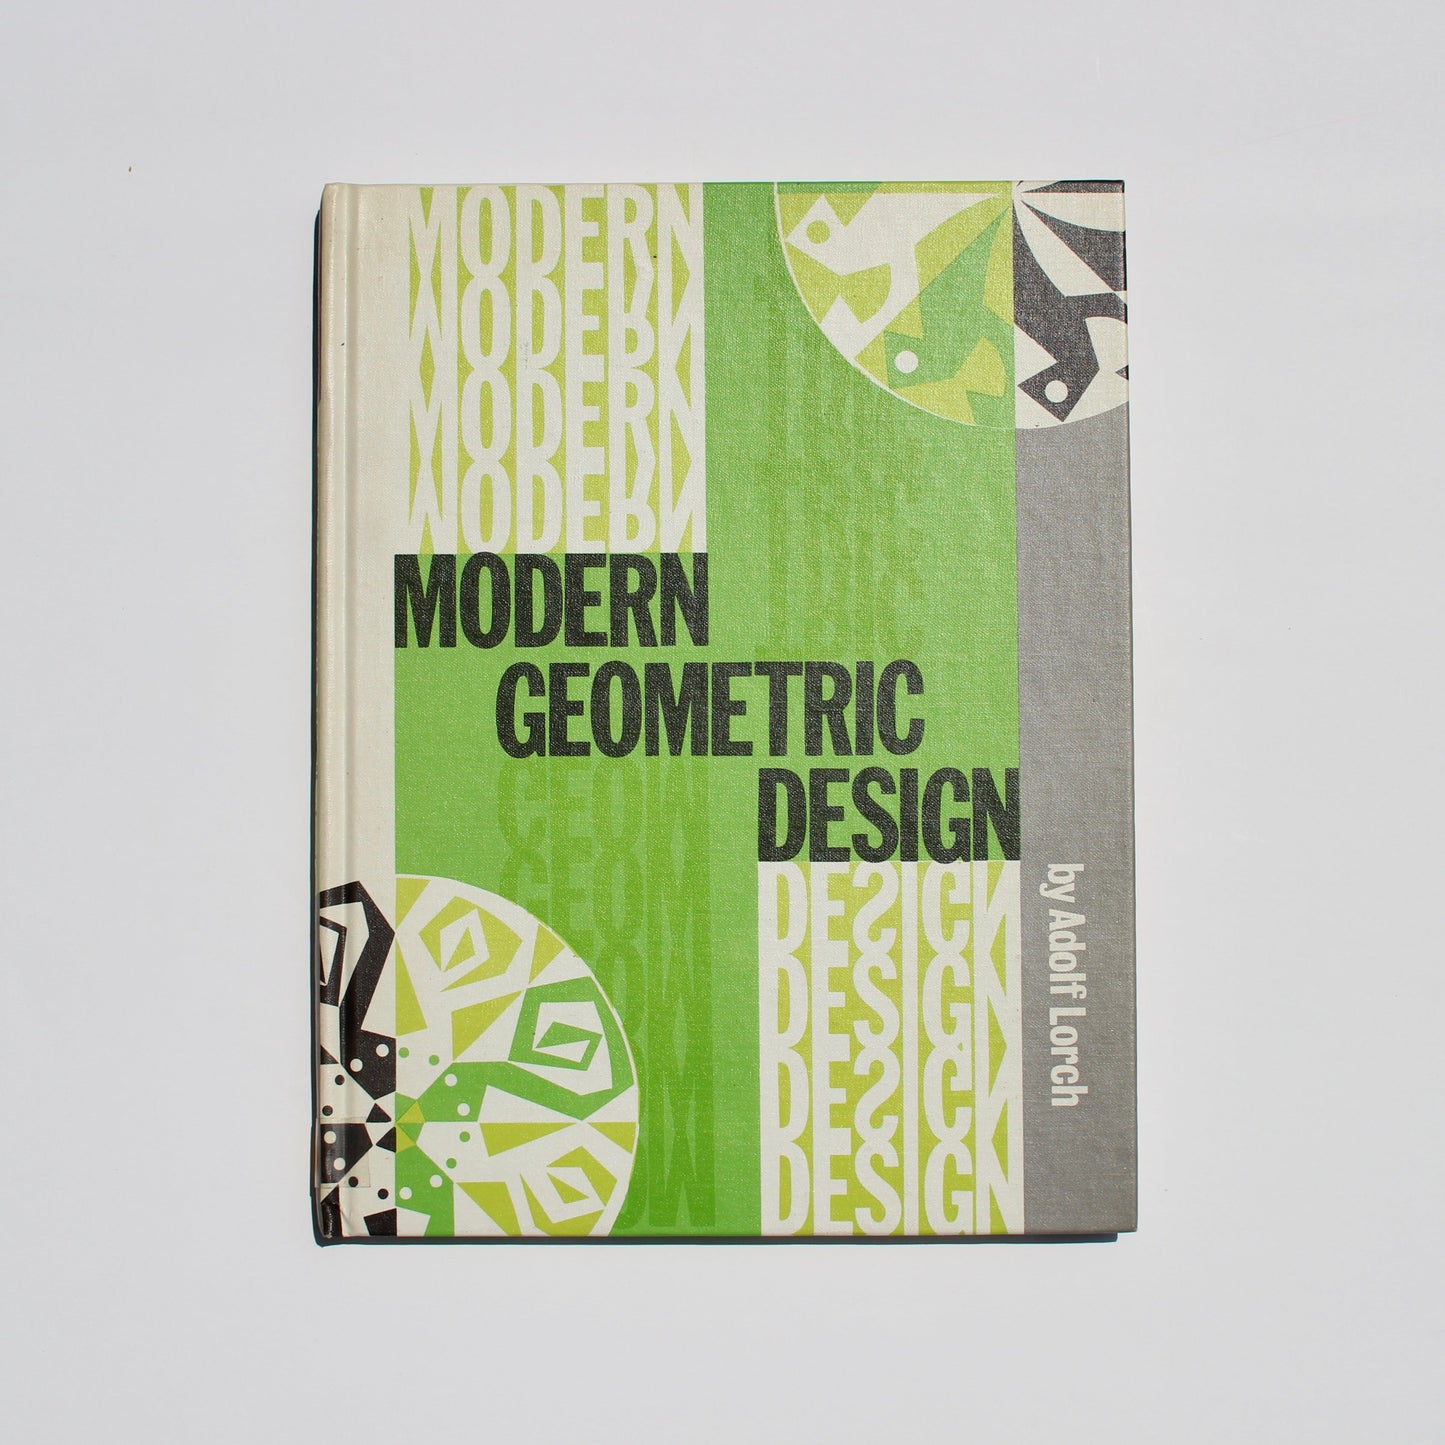 1971 "modern geometric design" art book